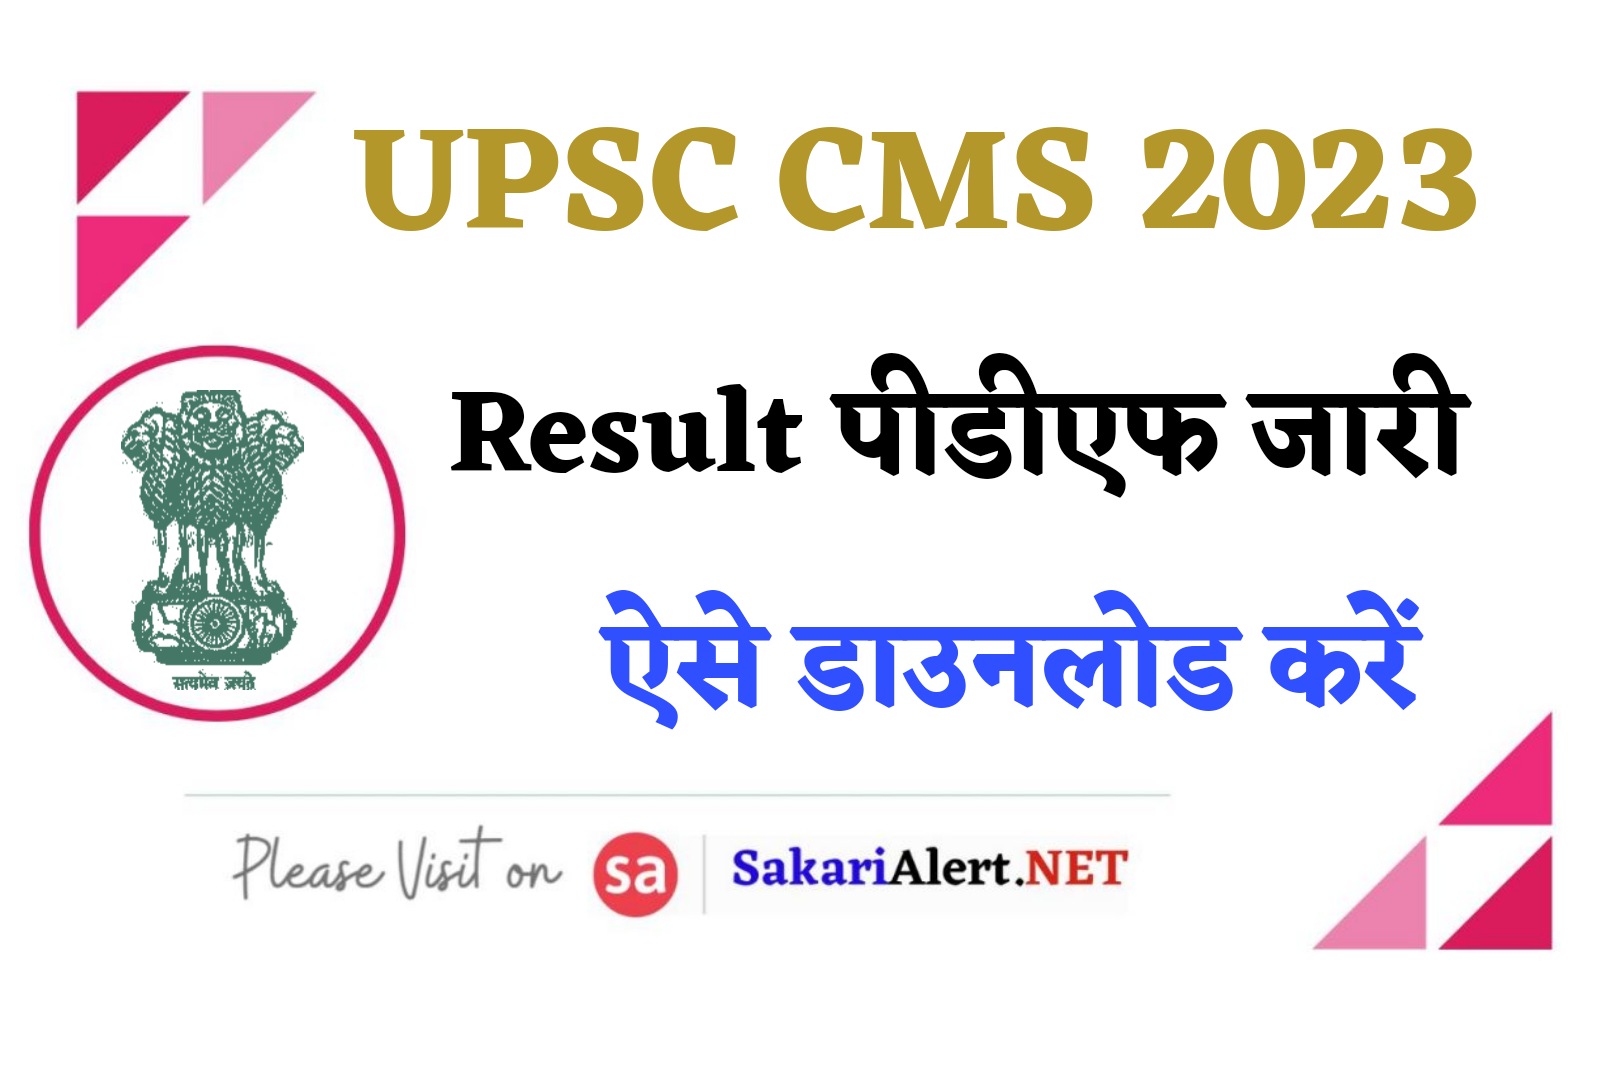 UPSC CMS 2023 Result